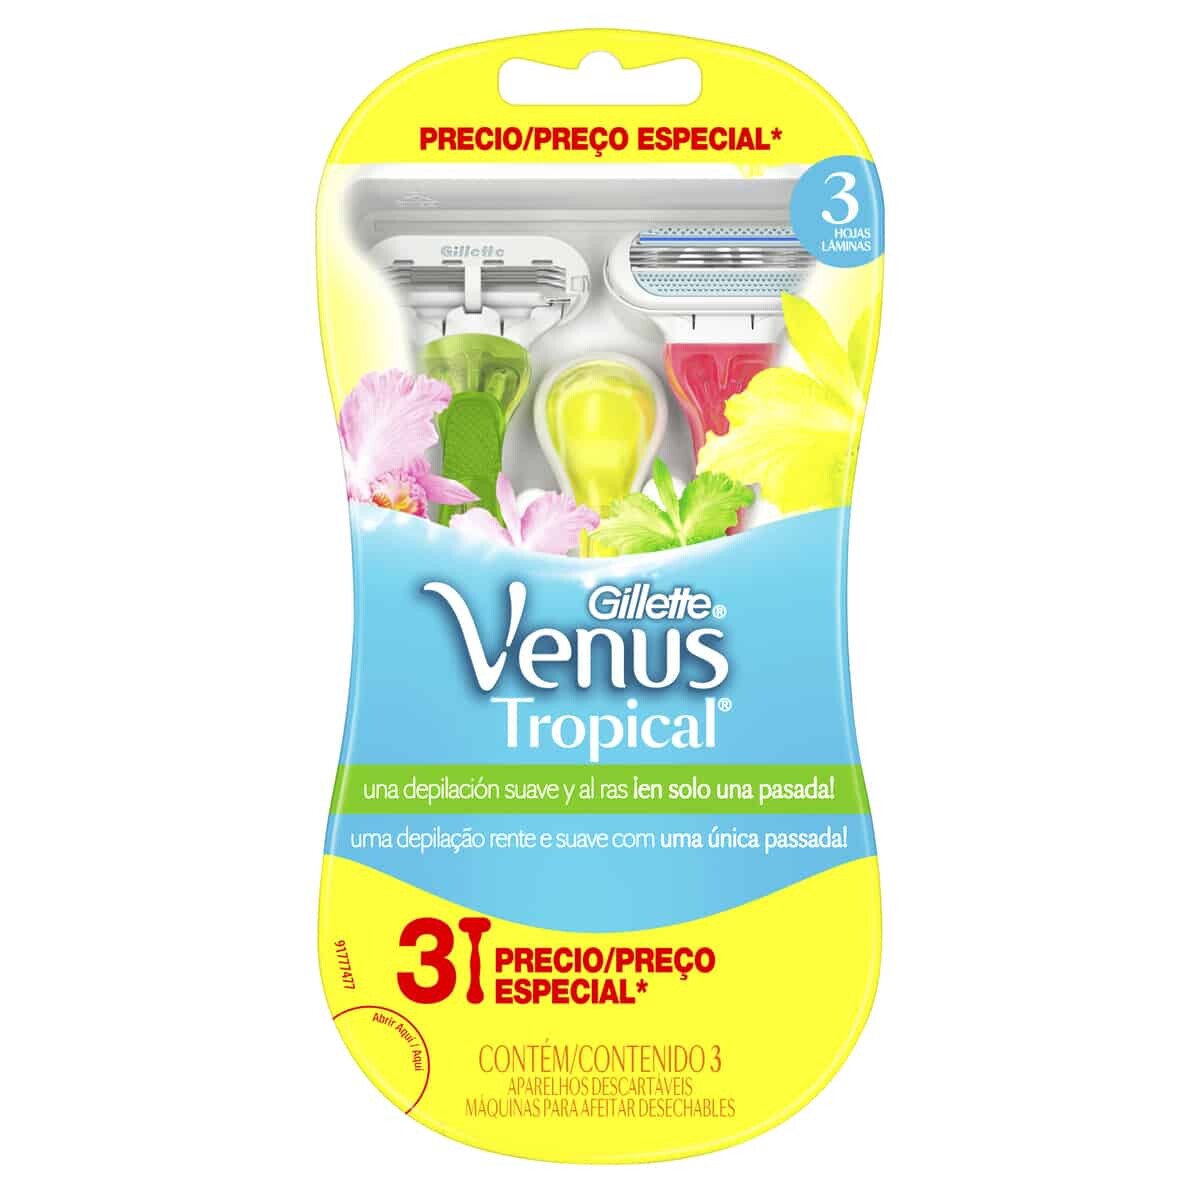 Venus Tropical X 3 